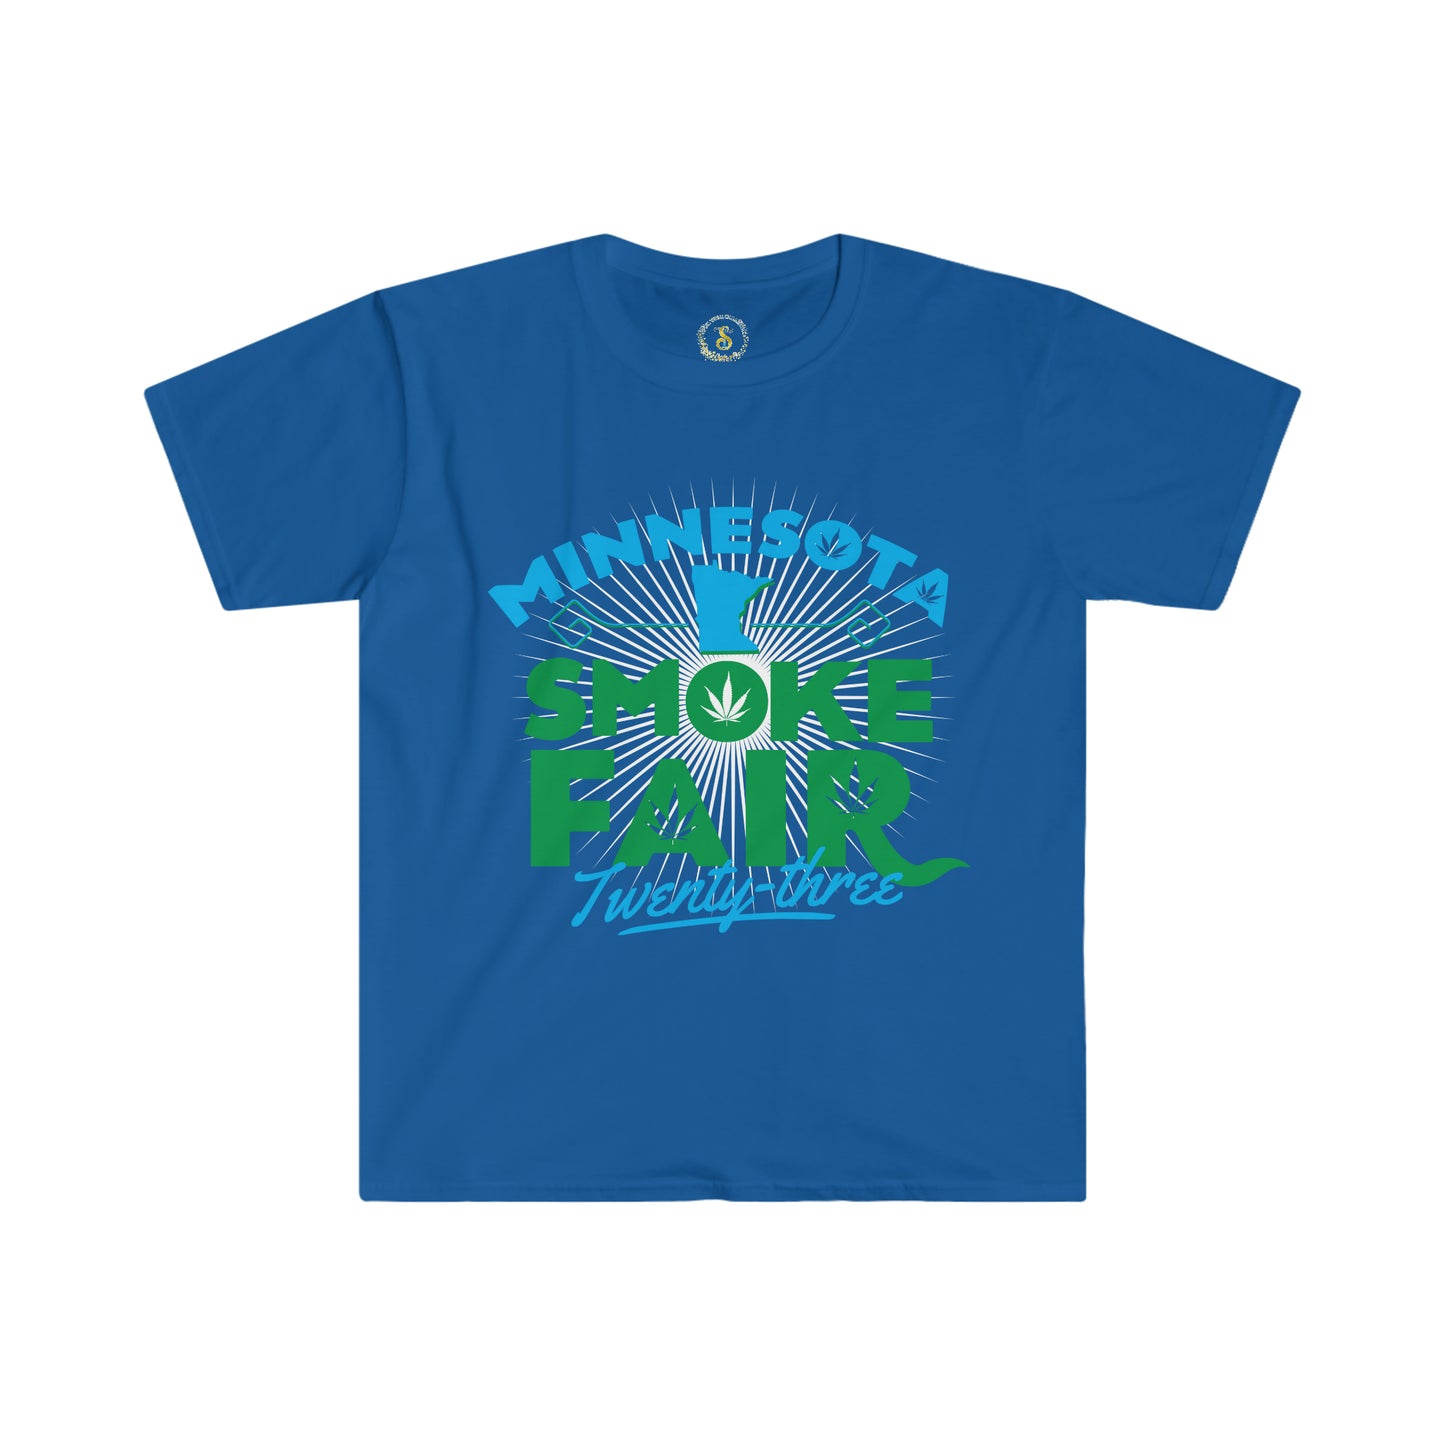 Minnesota Smoke Fair 23 | Minnesota Legal T-Shirt